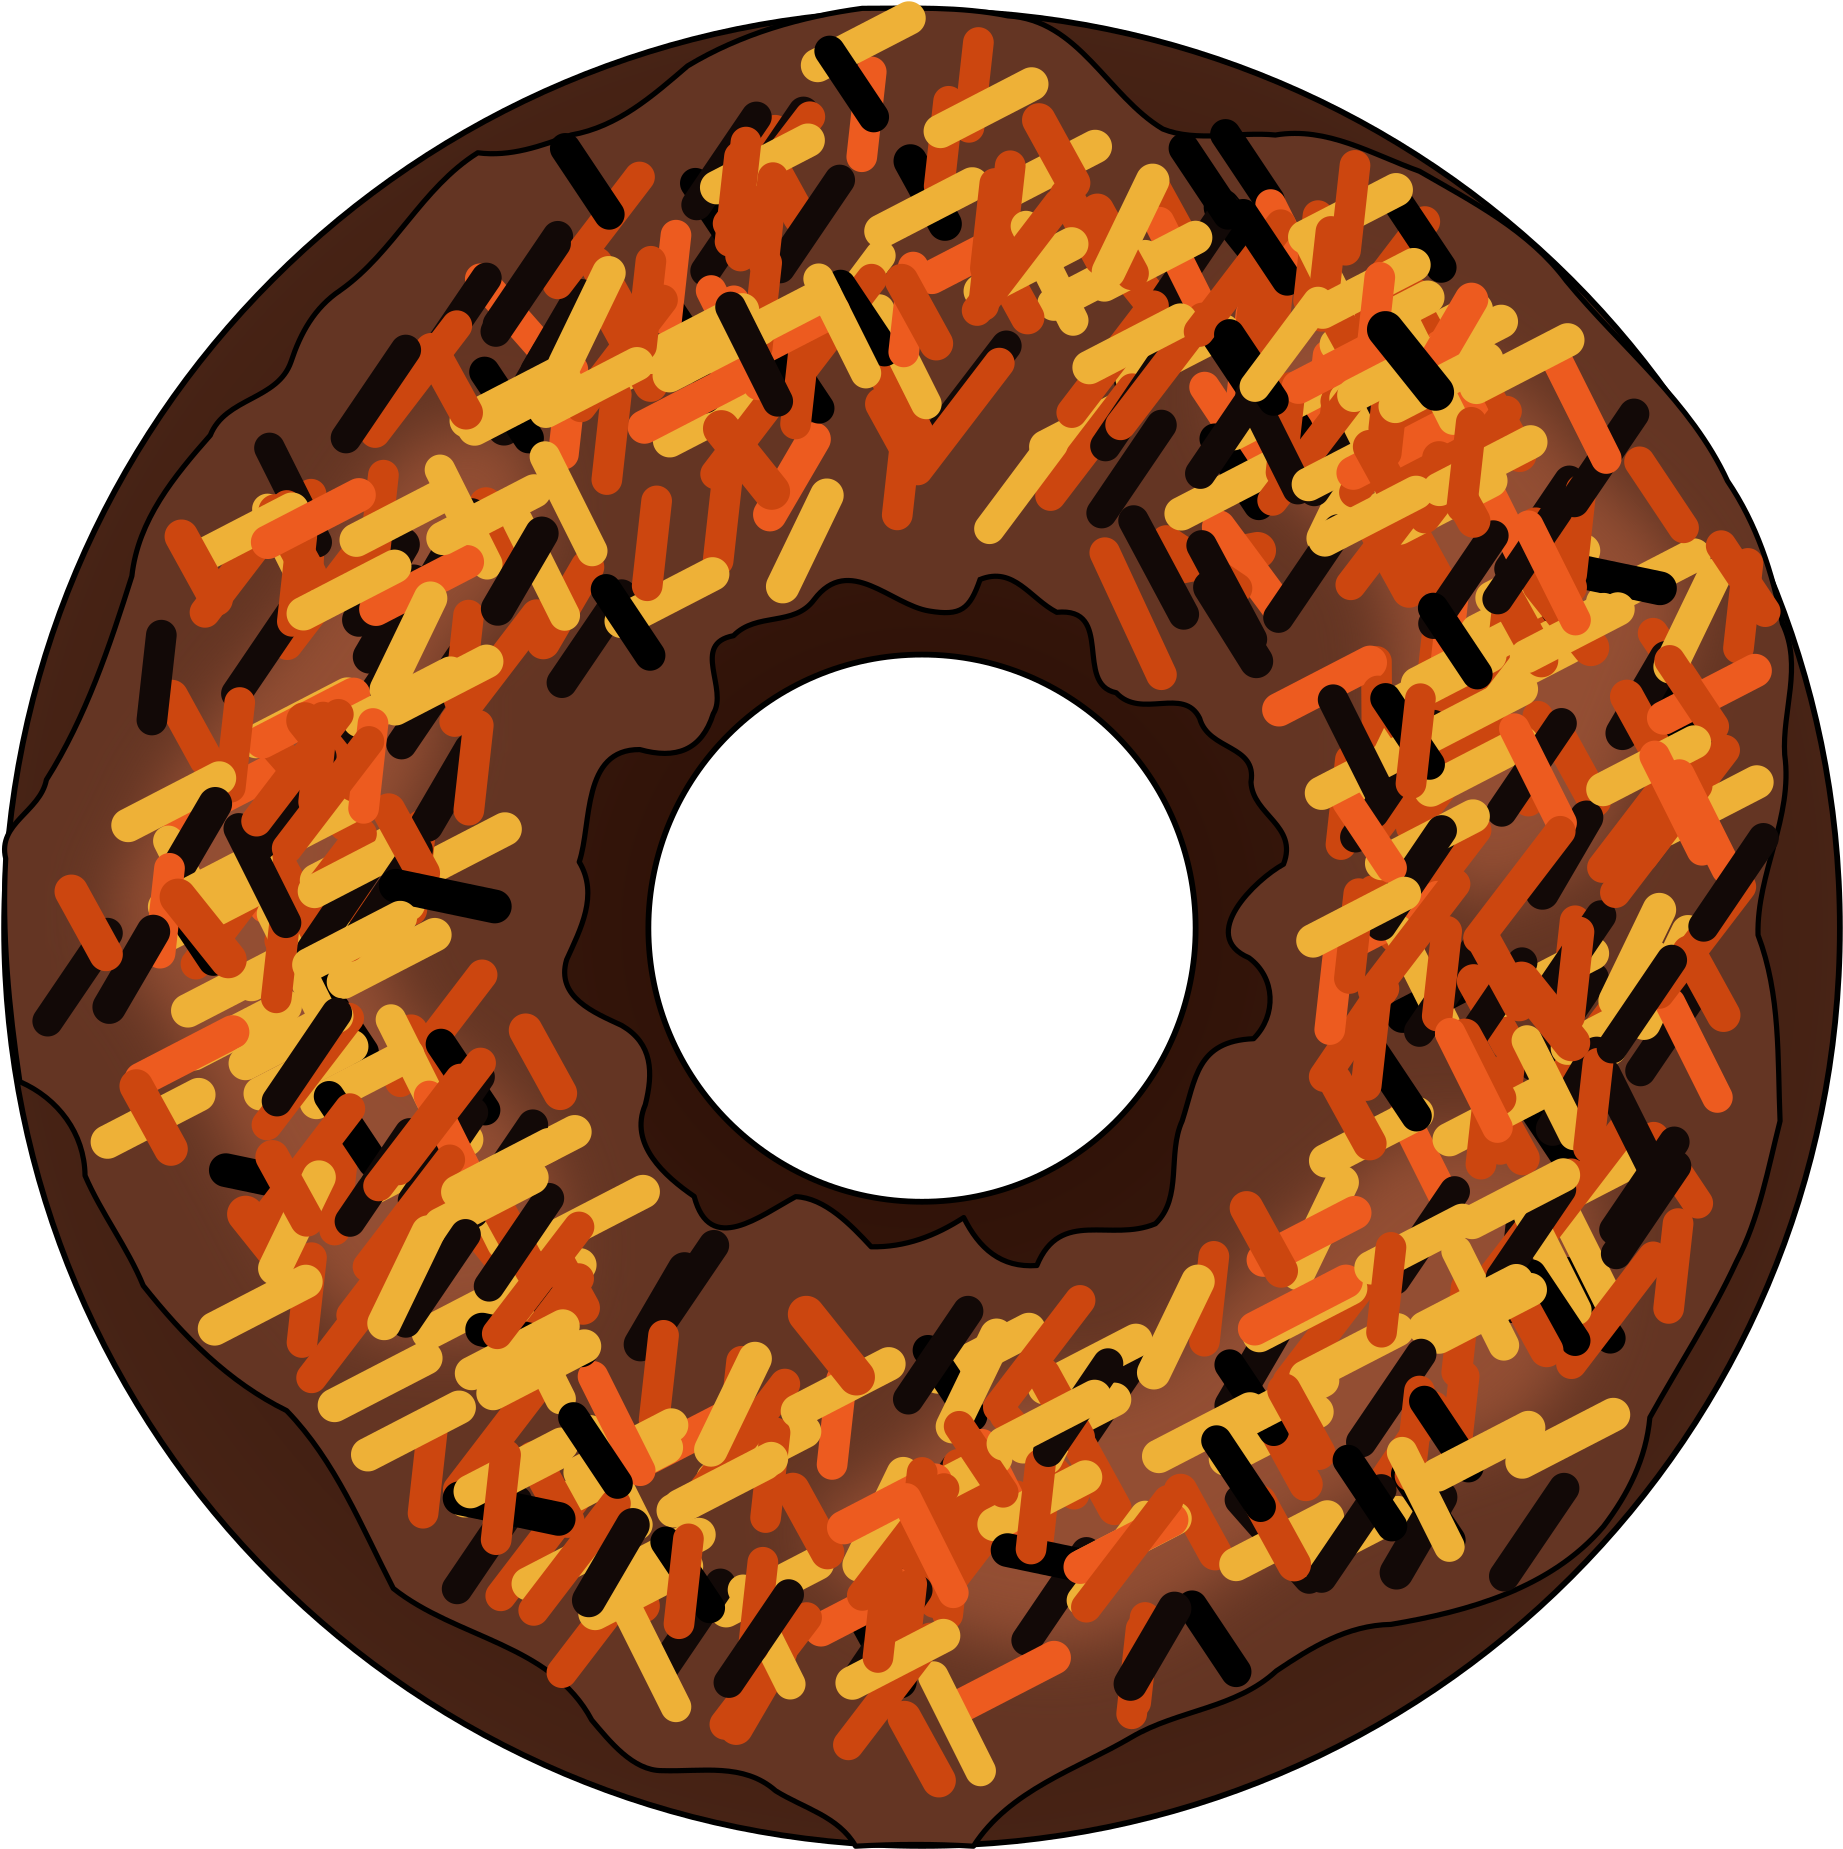 Or Halloween Donut - Doughnut (2394x2400)